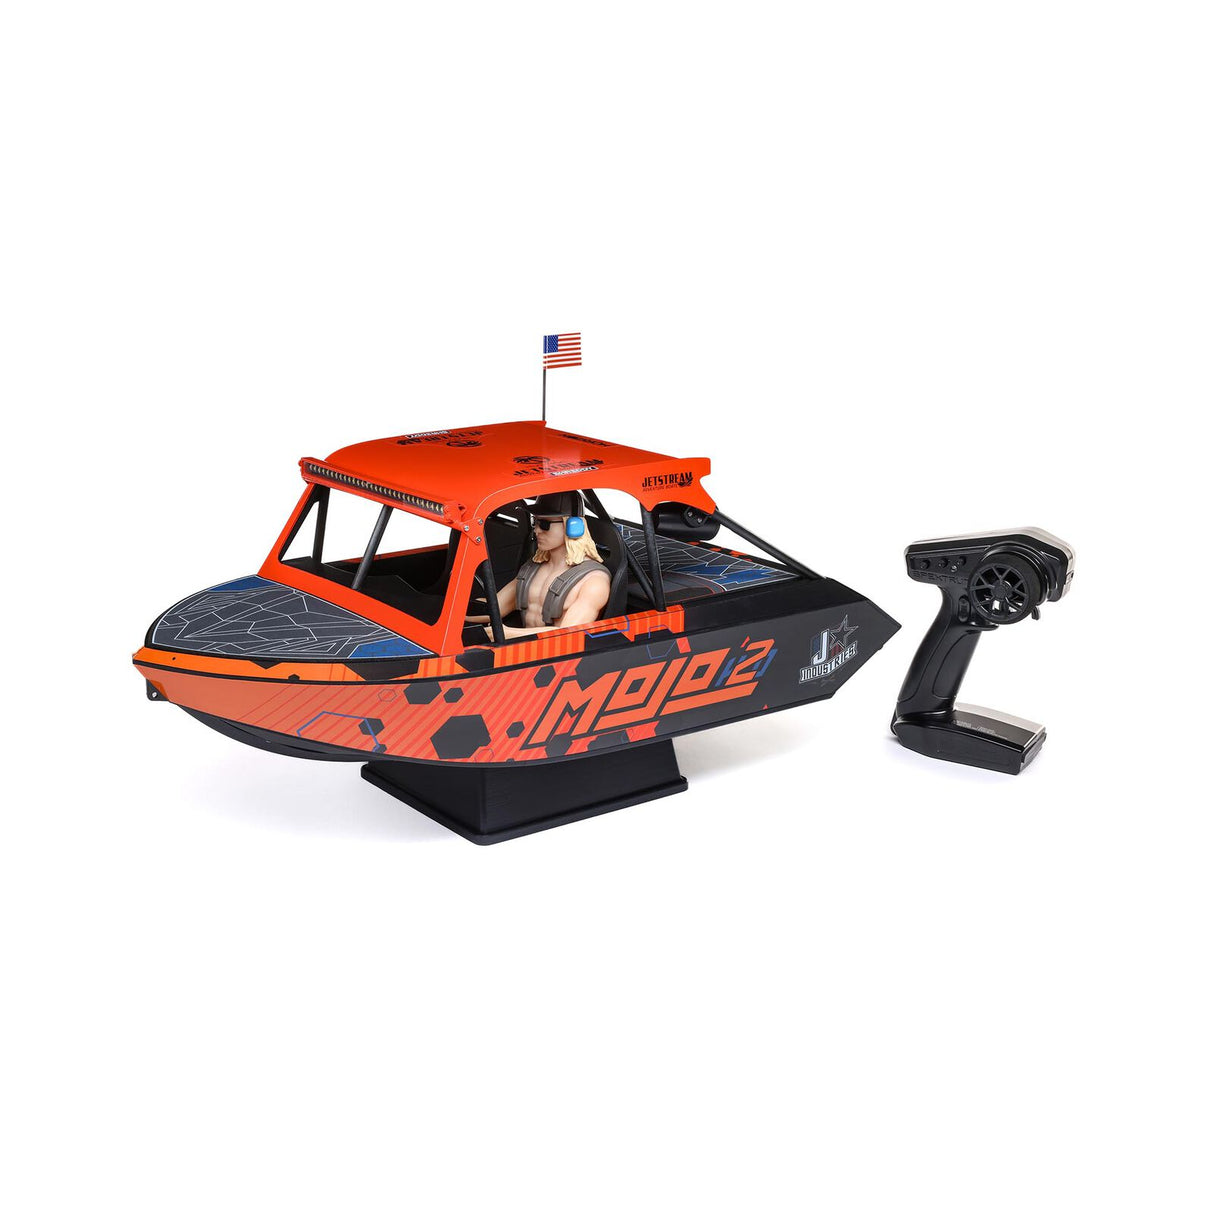 ProBoat 1/6 Jetstream Brushless 24inch Jet Boat RTR, Mojo 2 Scheme - Hobbytech Toys